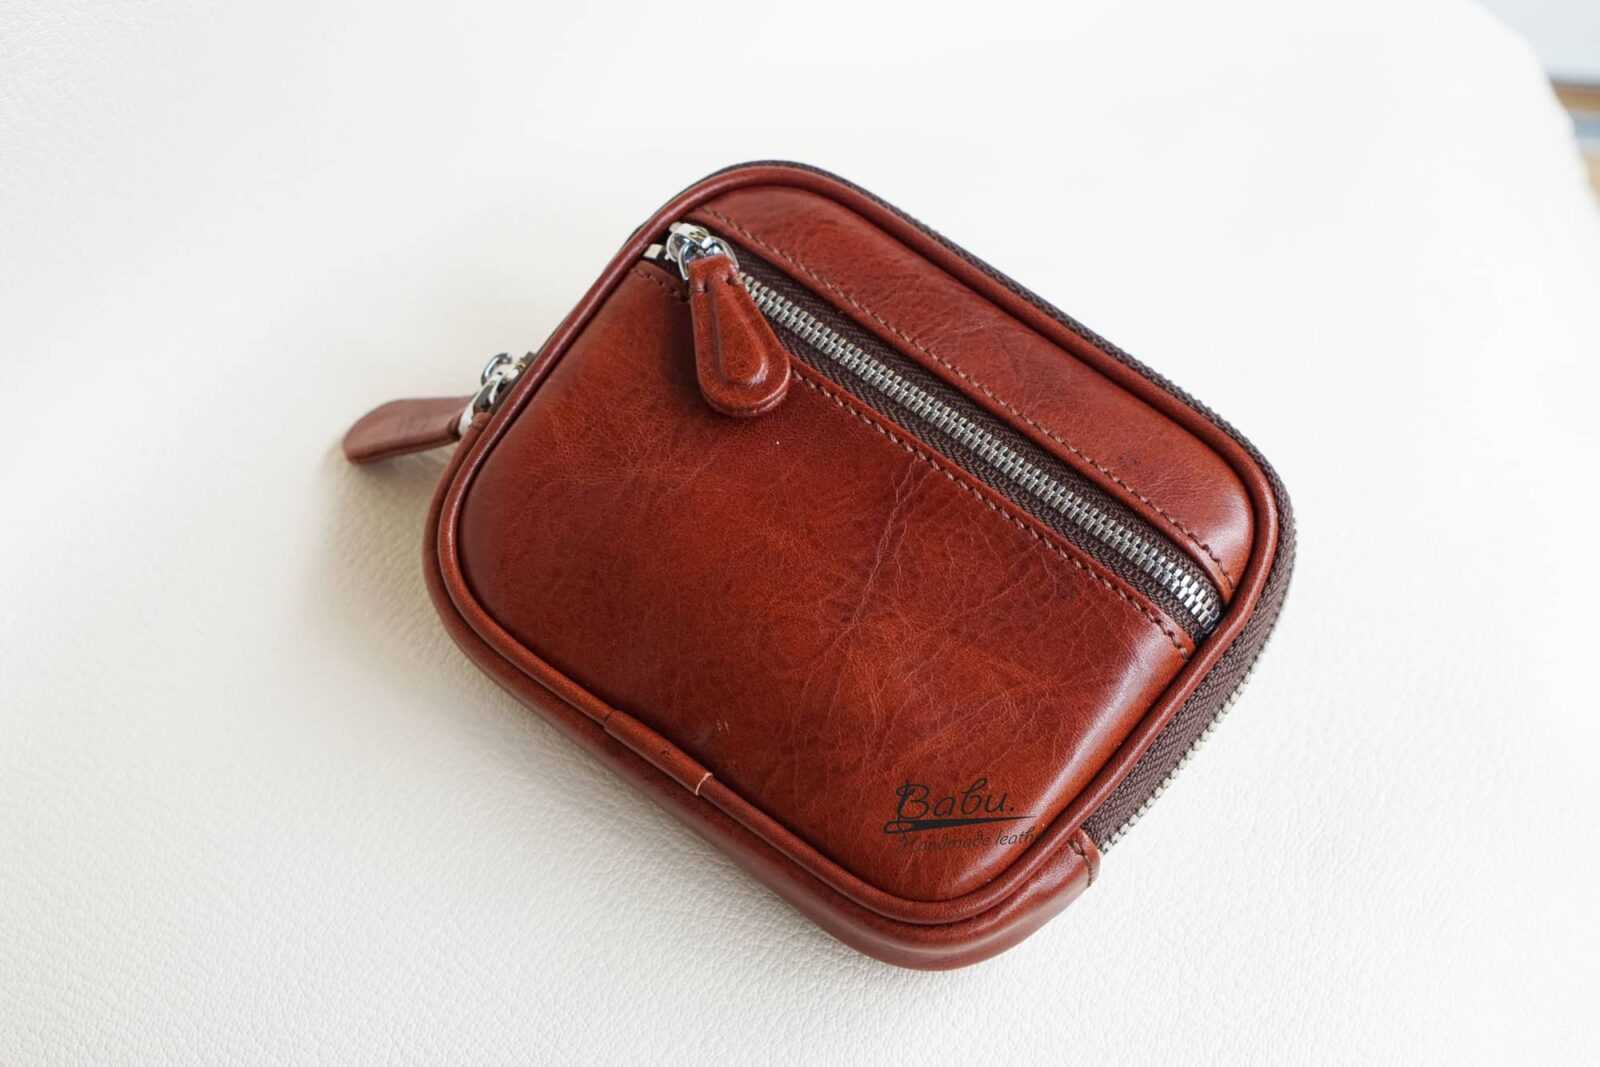 Buy Handcrafted Leather Handbags for Men Online - Hidesign